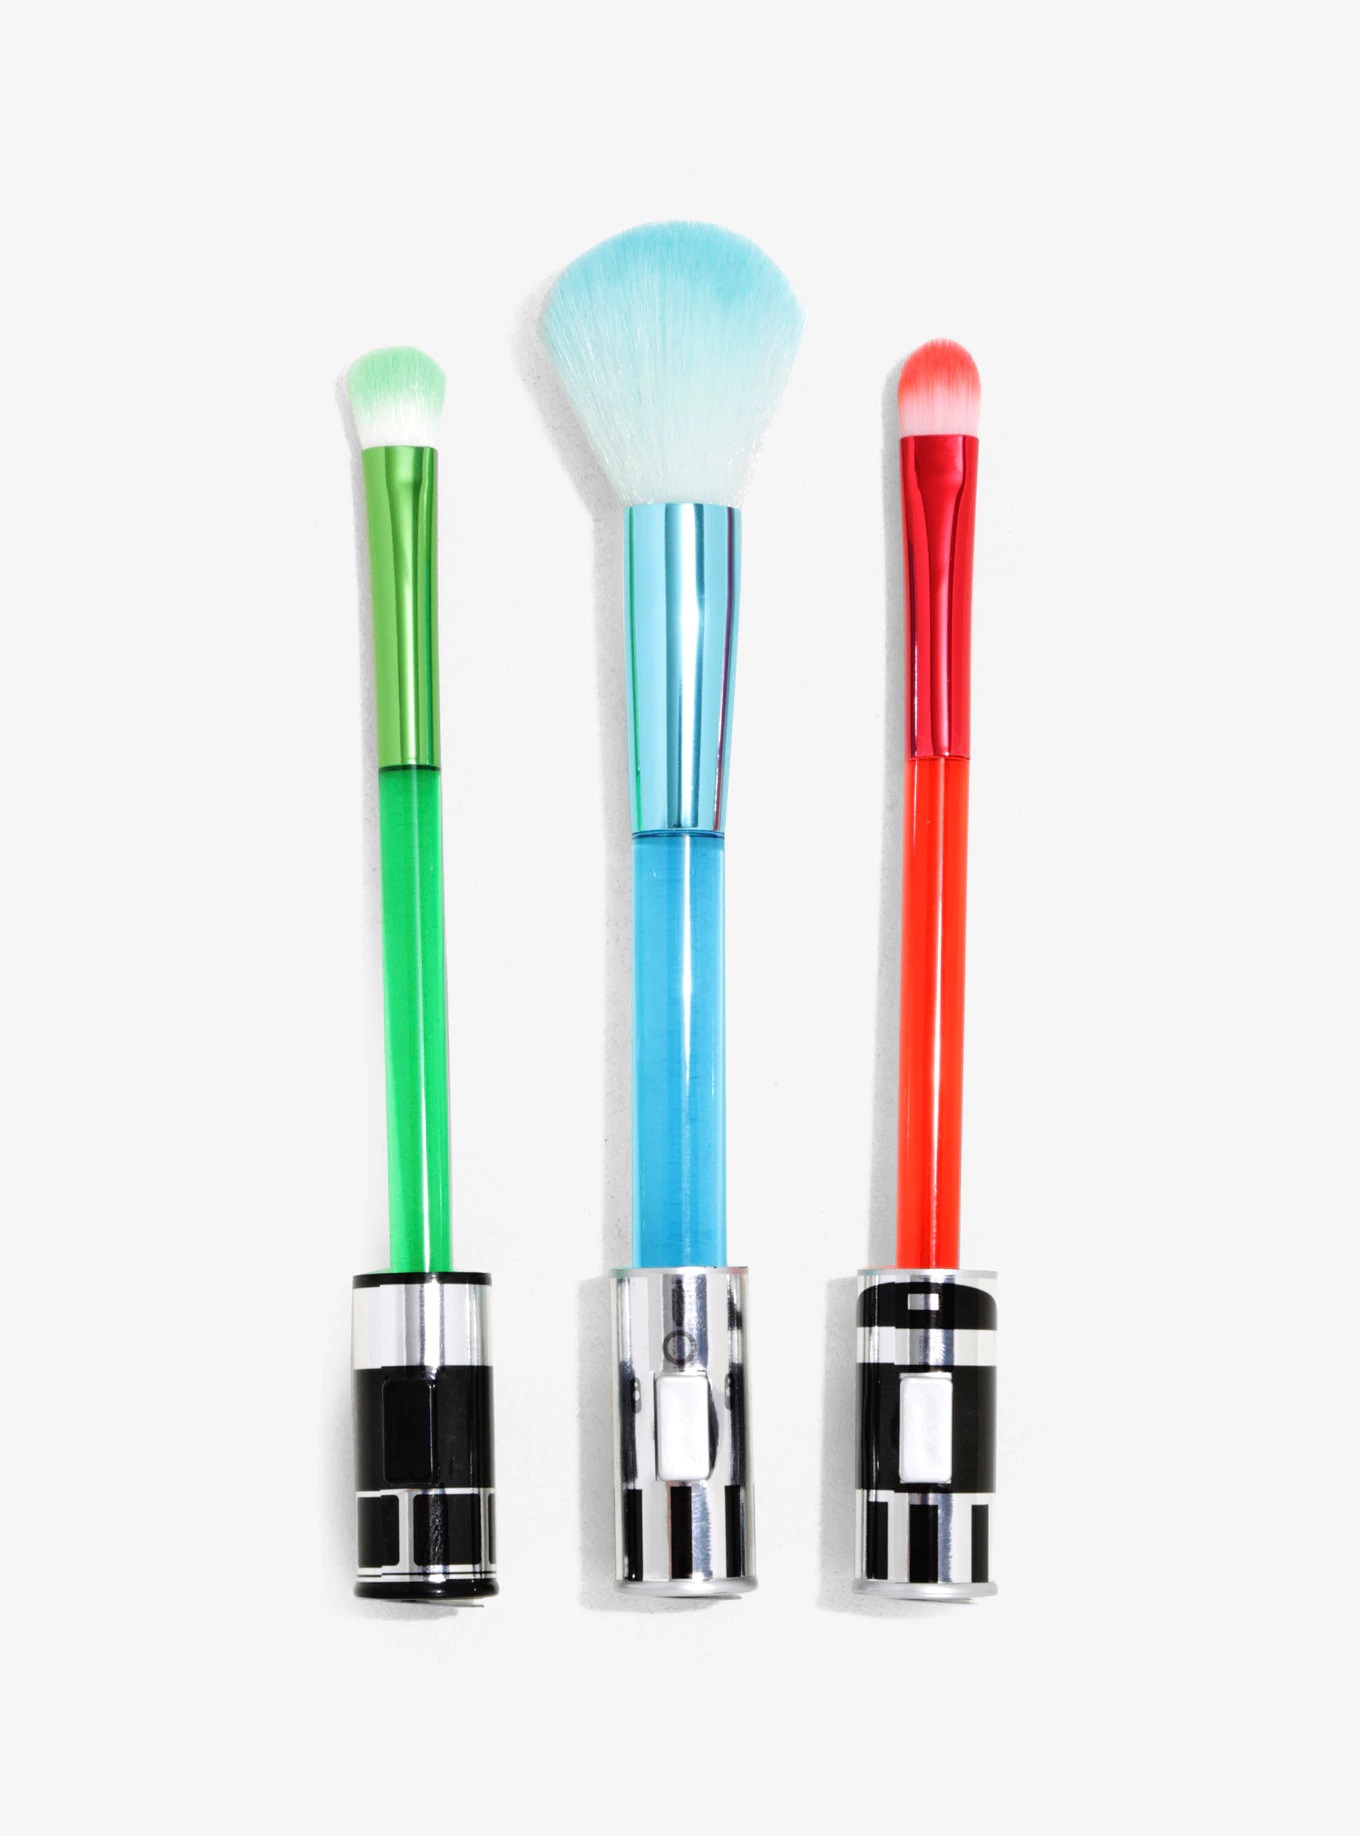 2020 NEW Star Wars Makeup Brushes Set Darth Vader Yoda Eyeshadow Make Up Brush